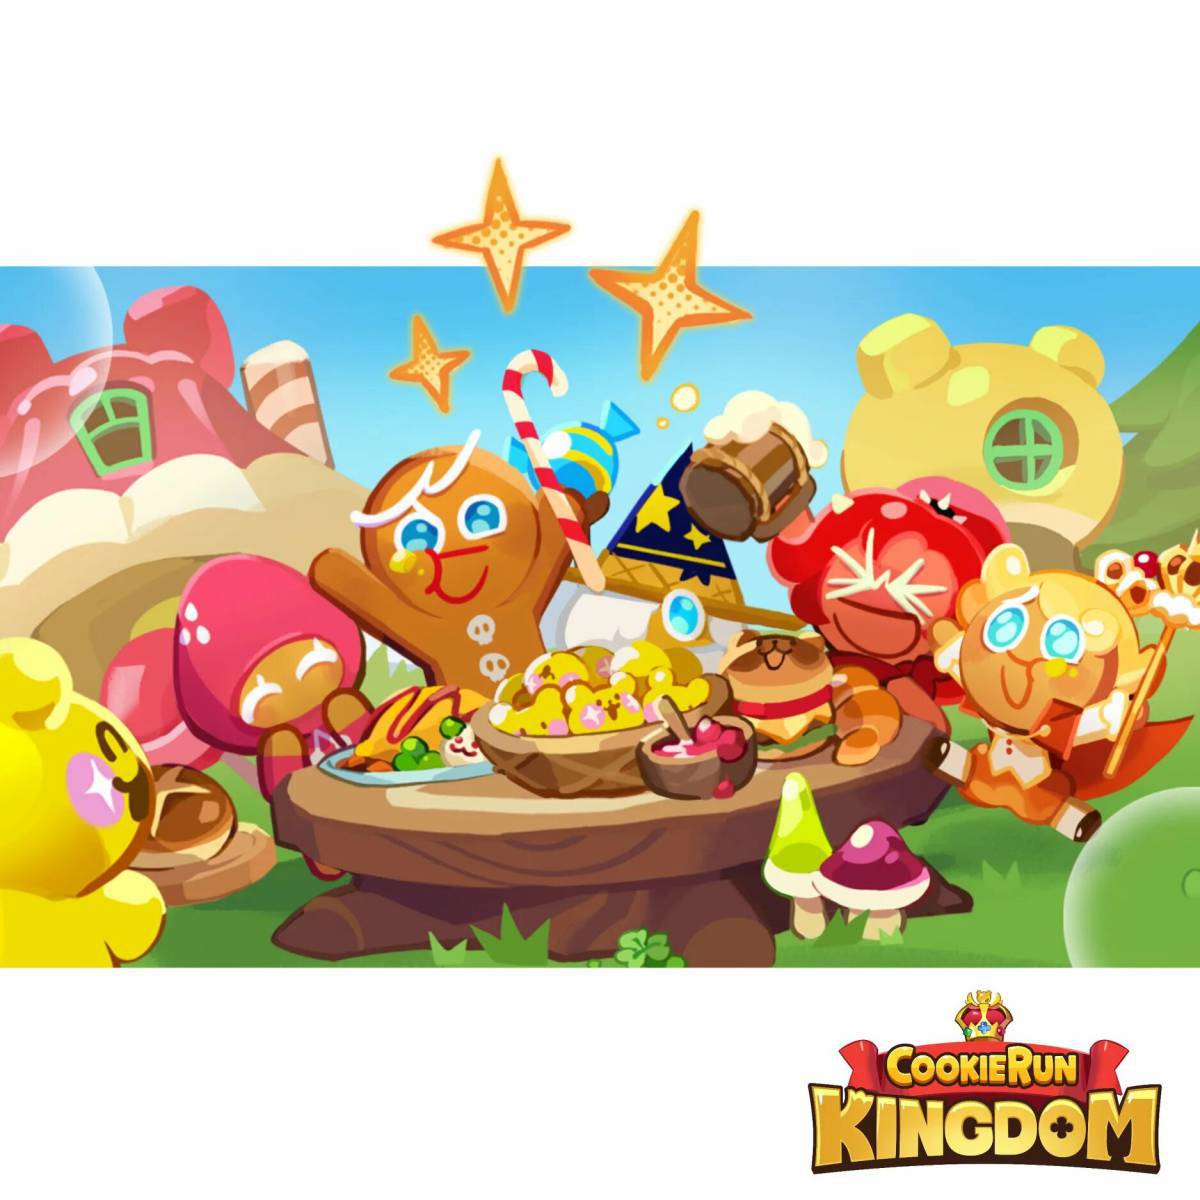 Cookie run kingdom #22